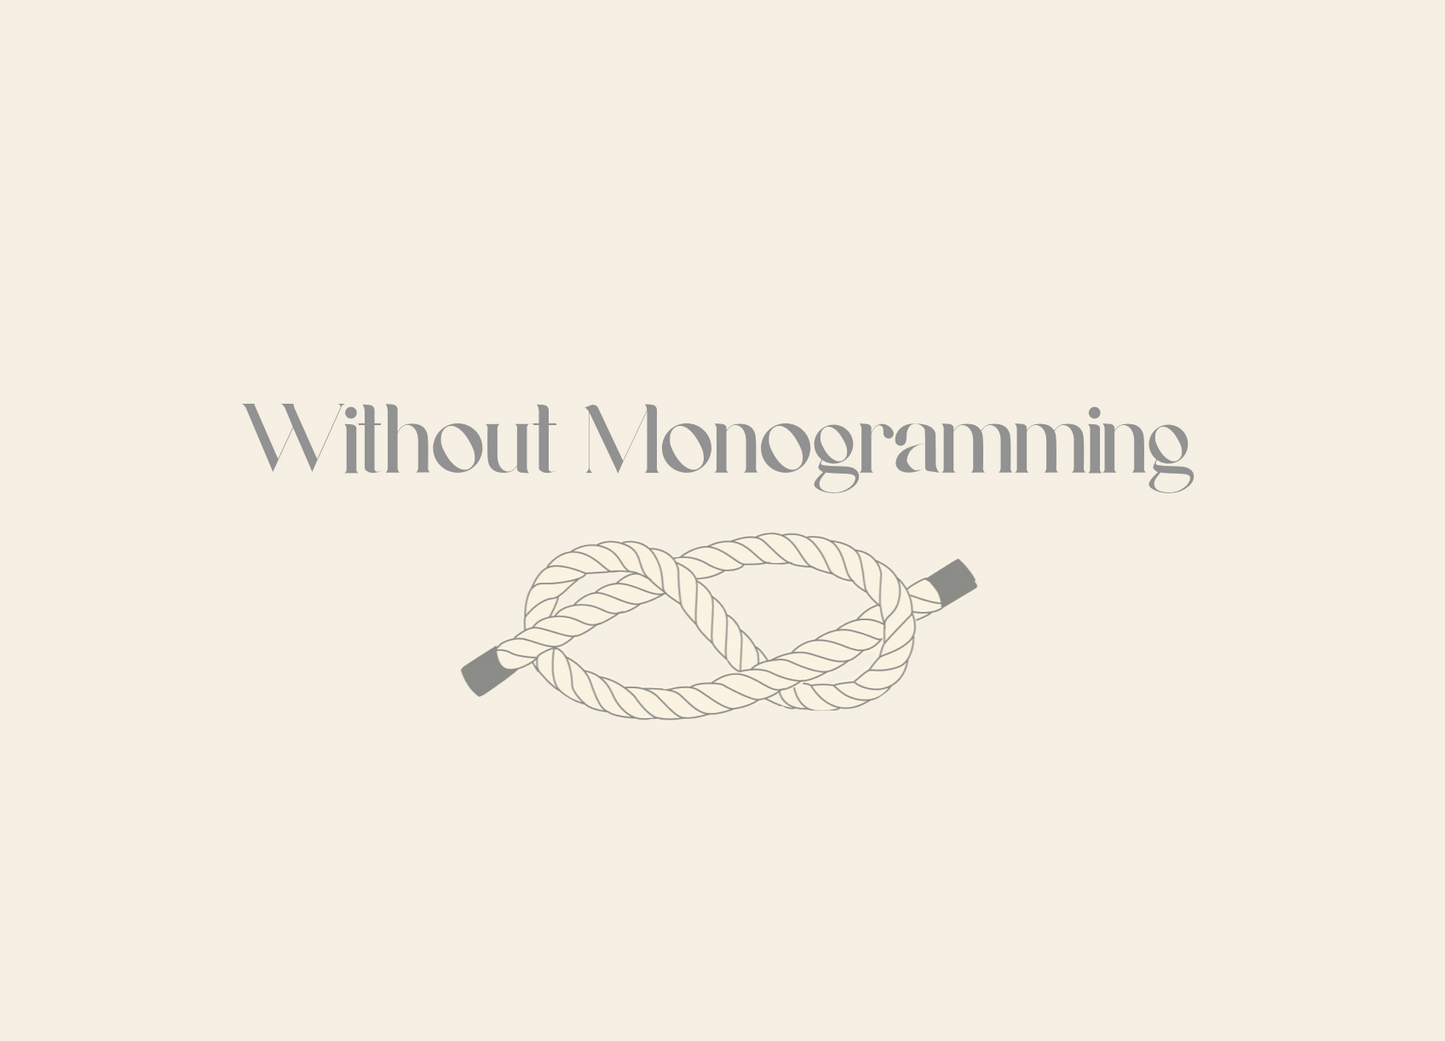 Without Monogramming